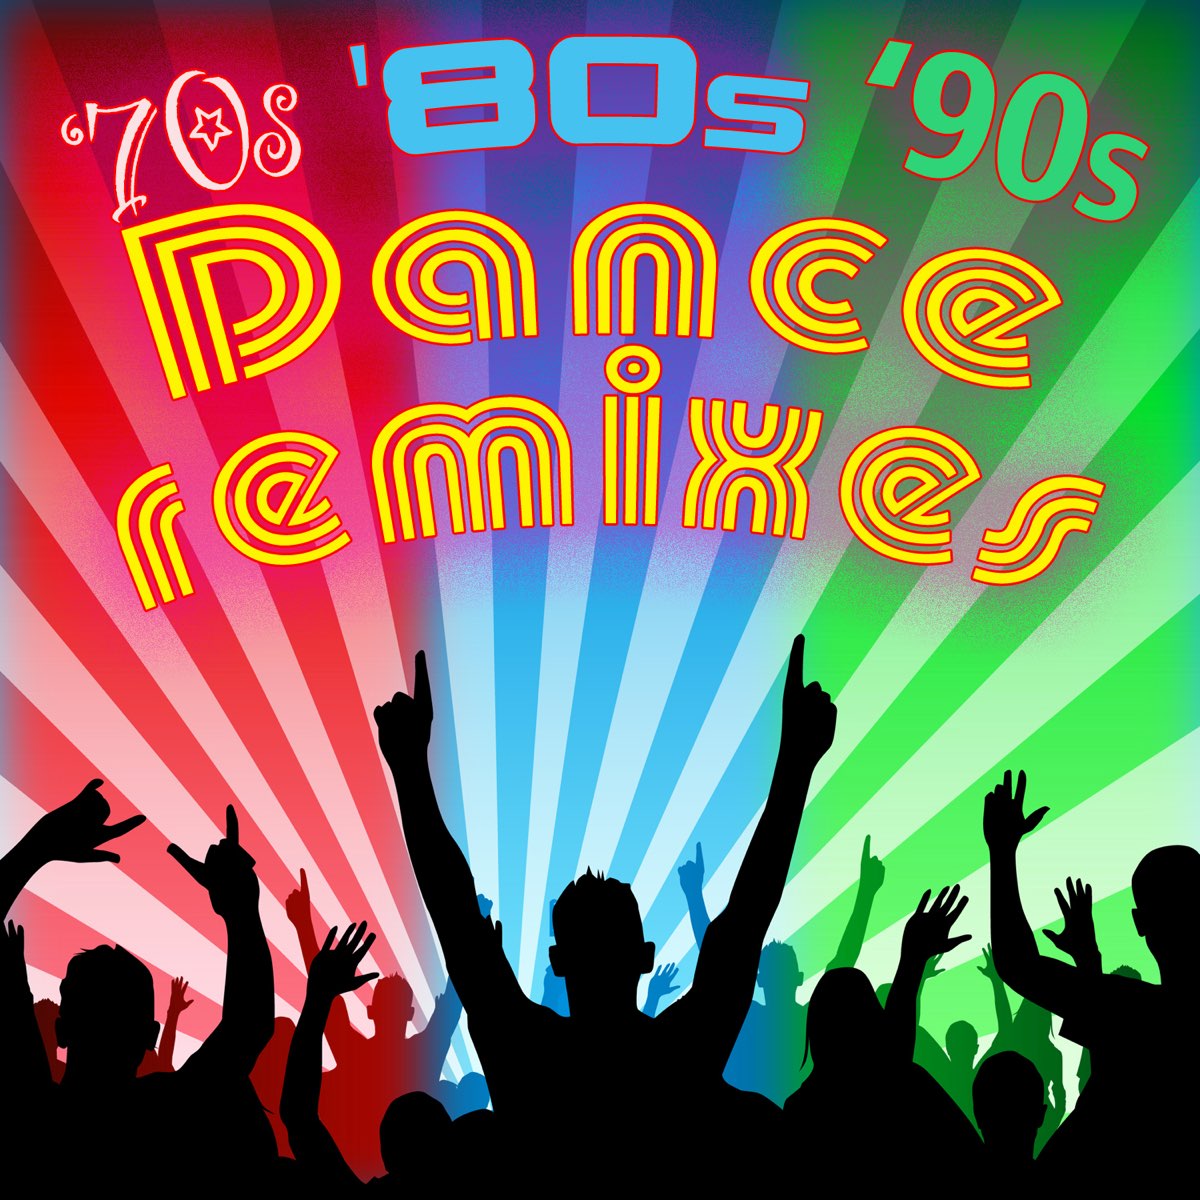 Dance 90s. Funk Music 70's. Let's Dance картинка. Rise up Club. Zorba s dance remix